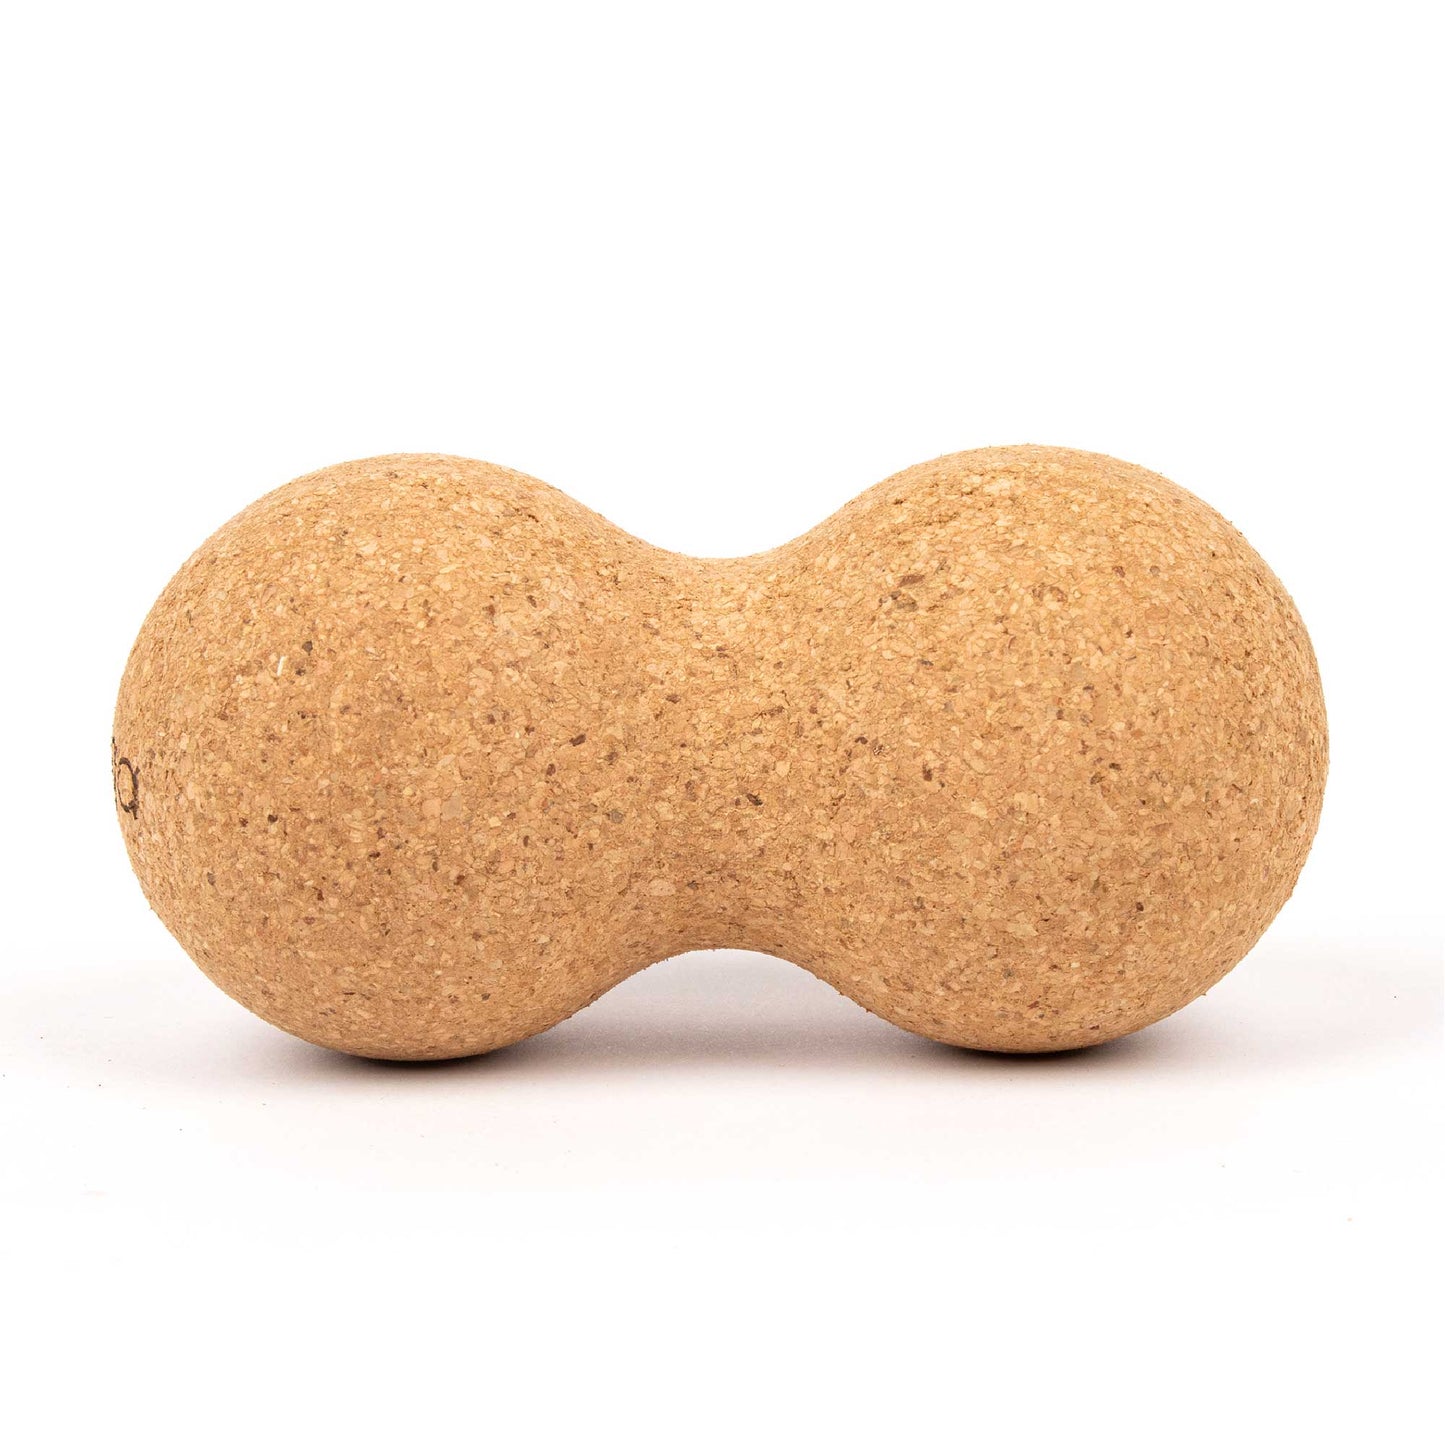 Myga Yoga Cork Massage Peanut - Myga